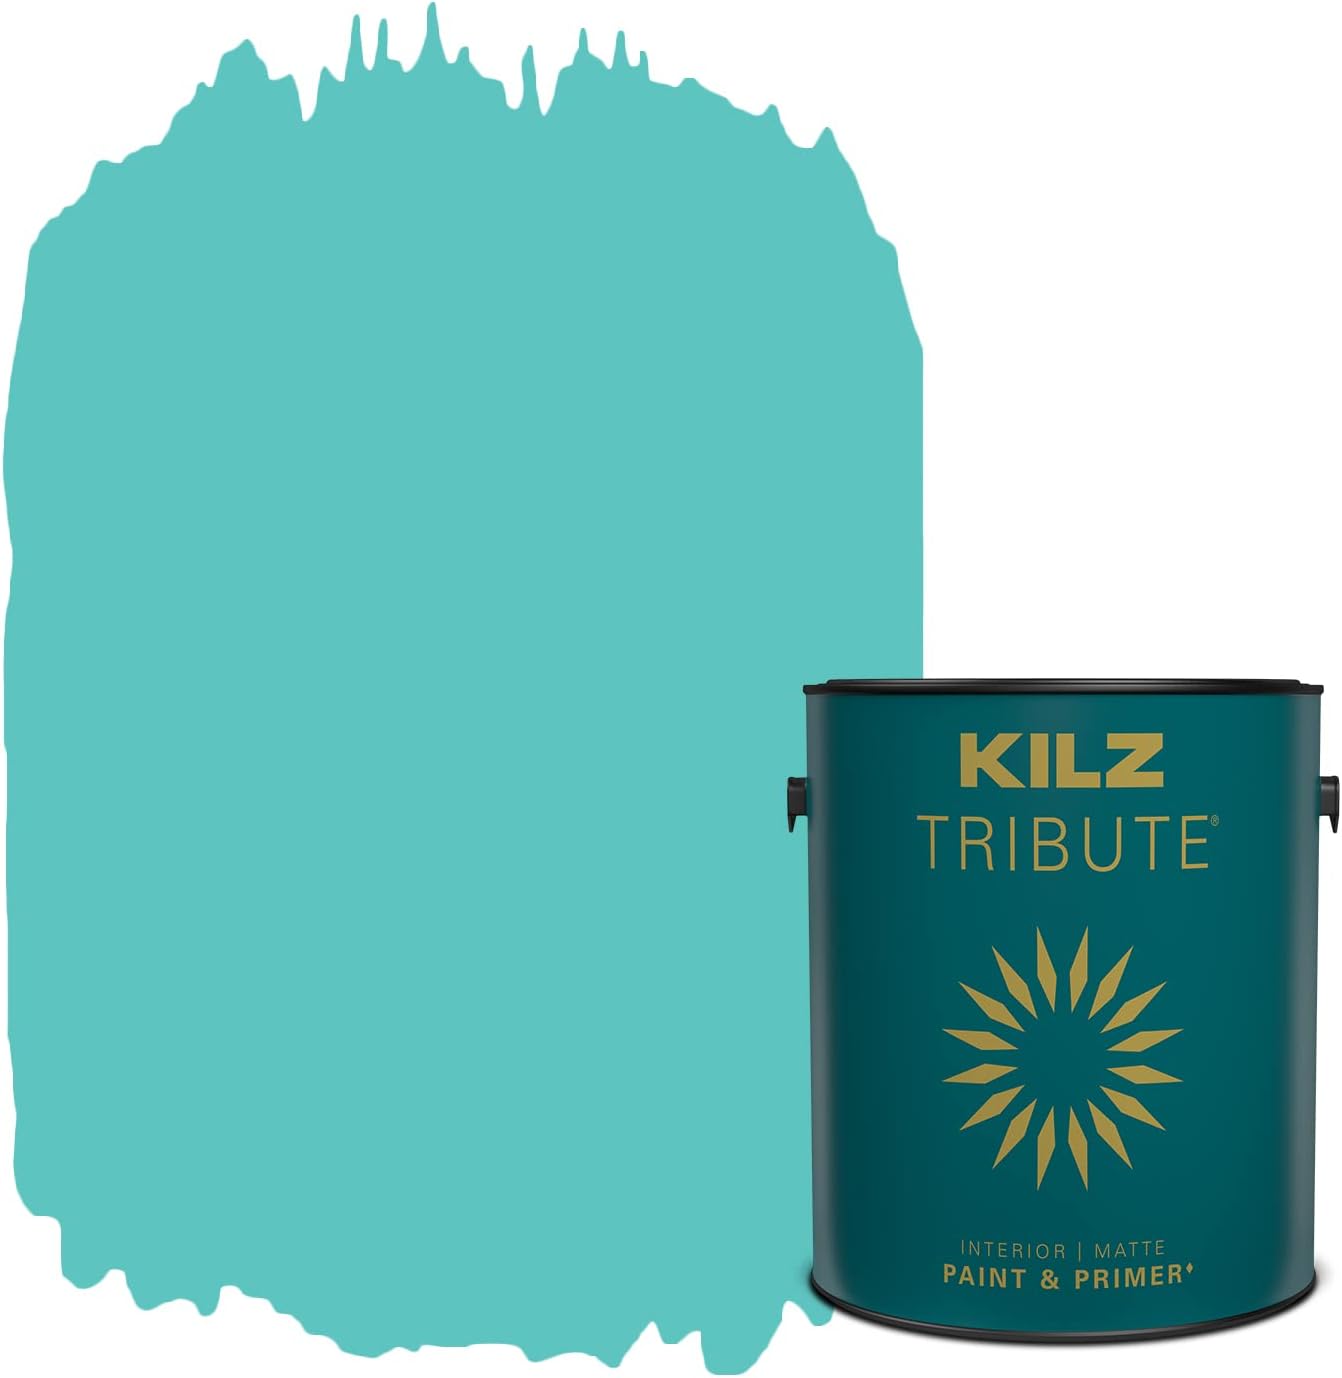 KILZ TRIBUTE Paint & Primer, Interior, Matte, Tropical [...]